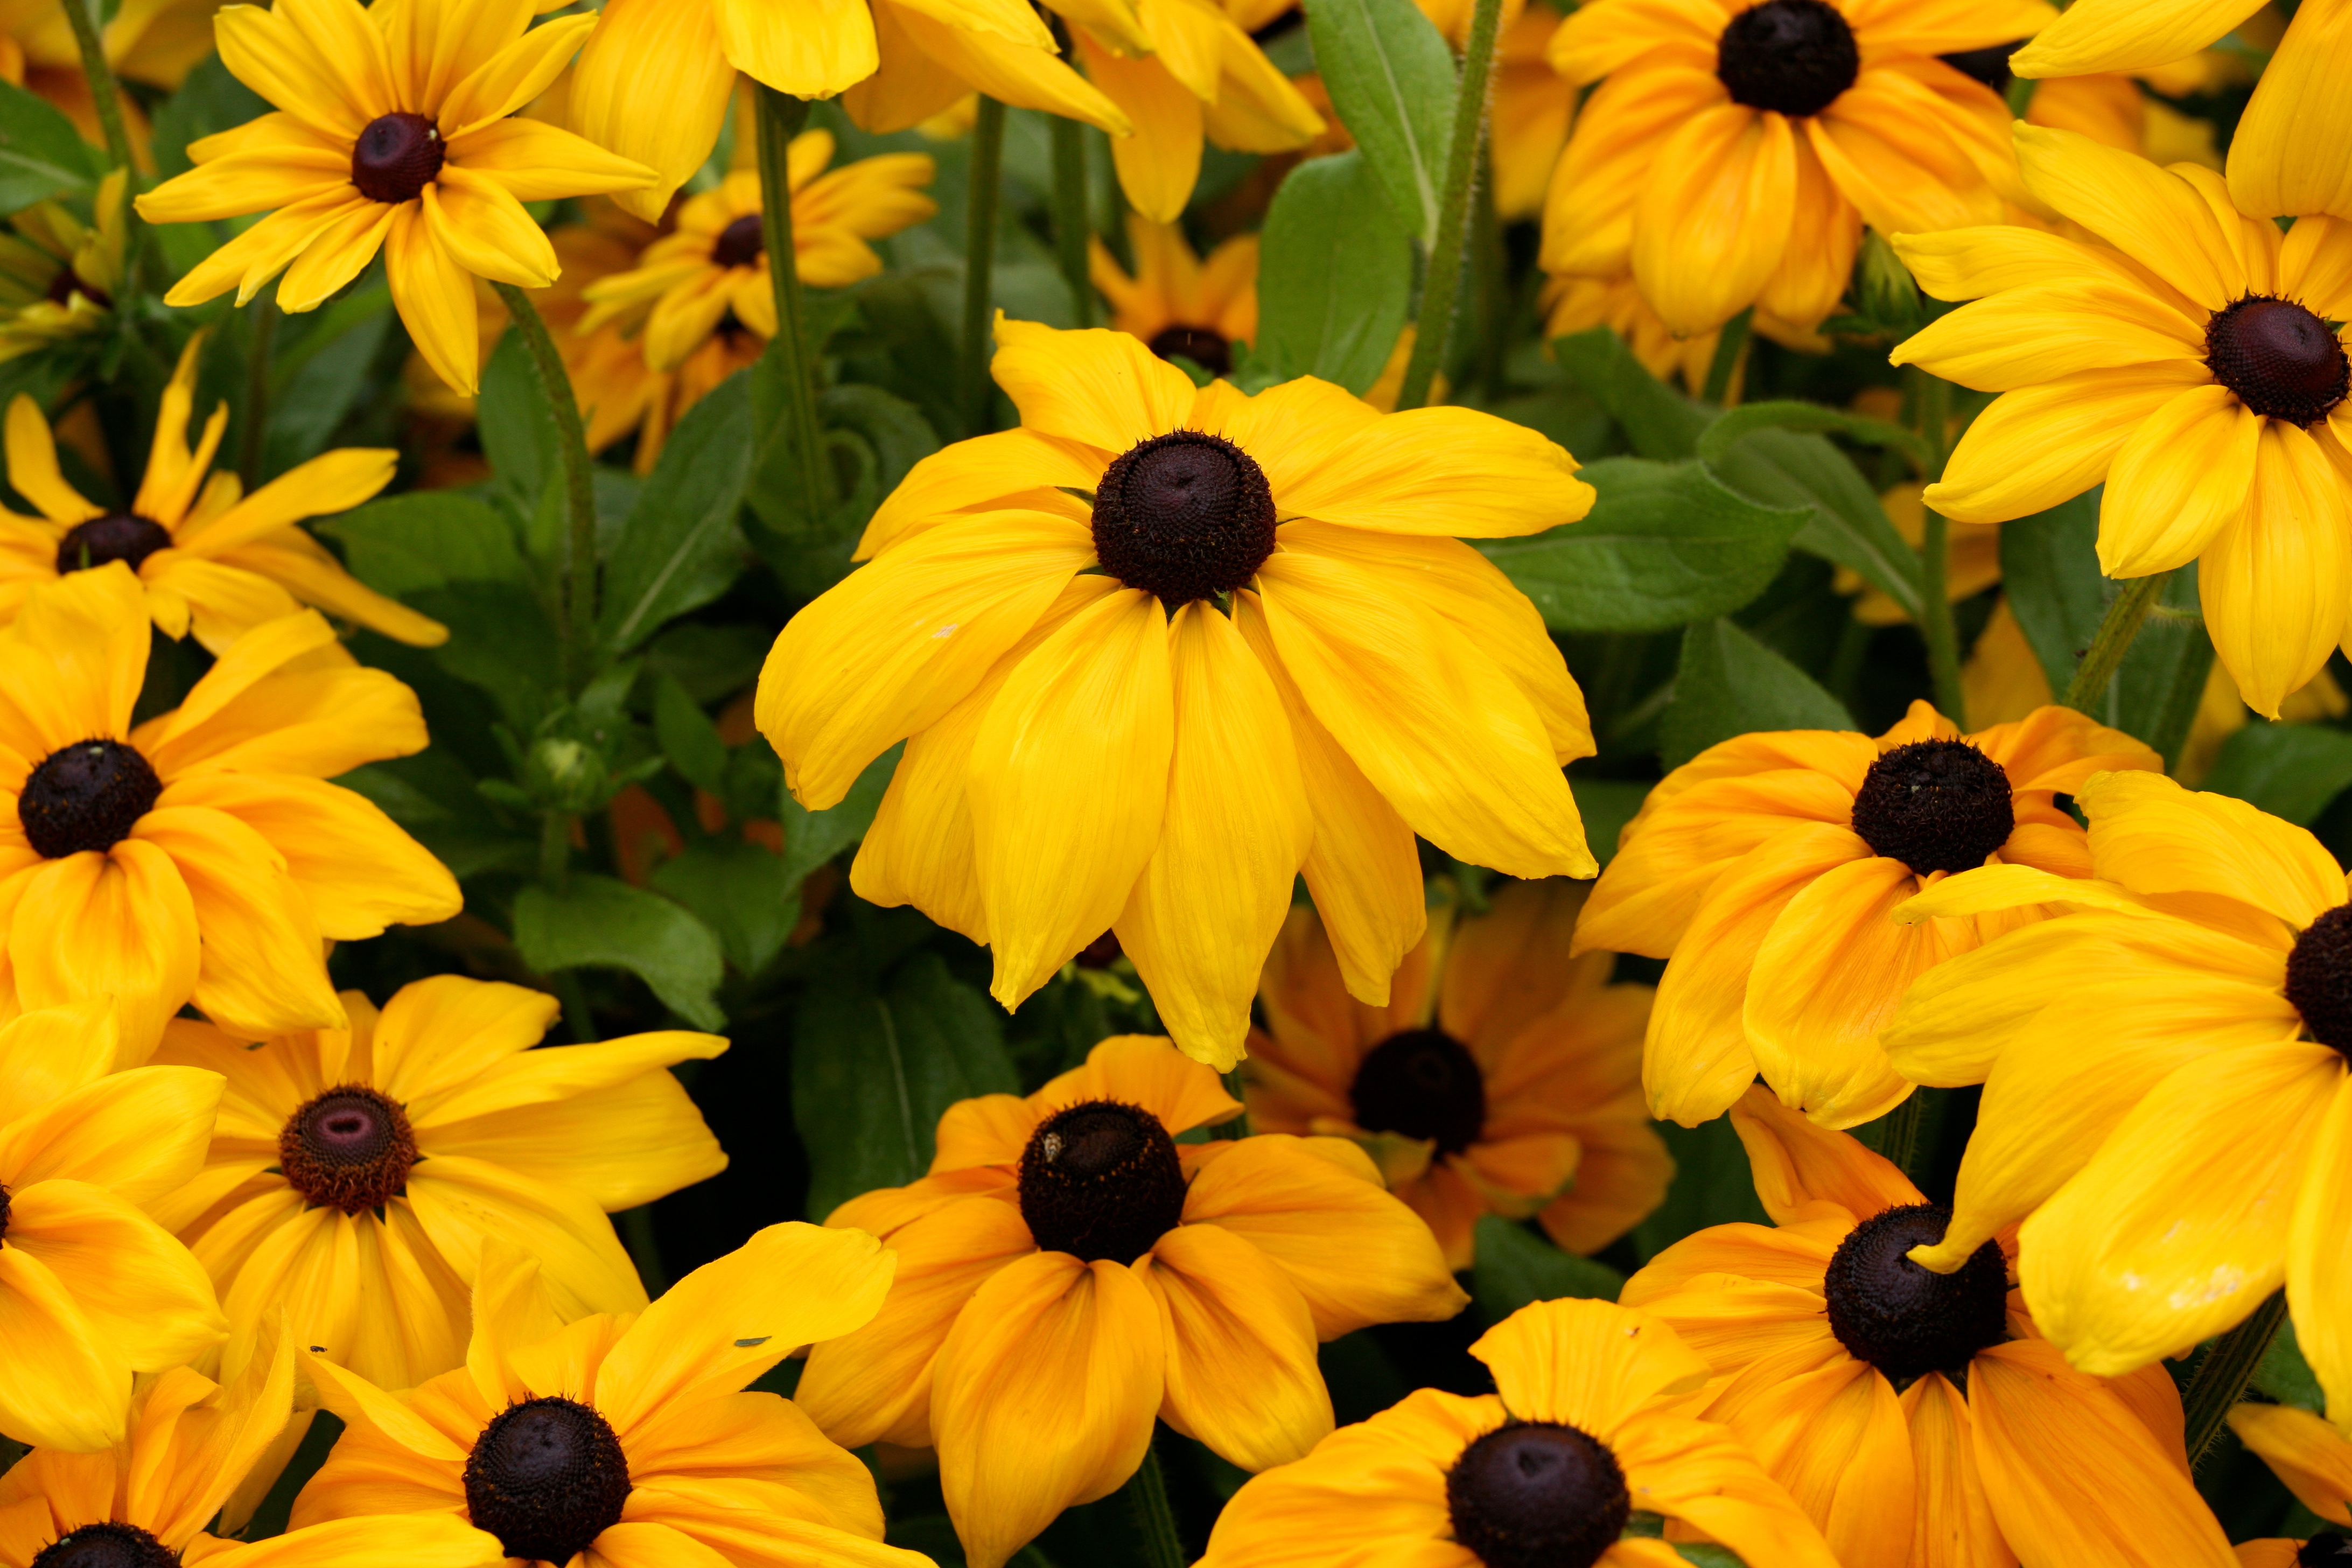 File:Yellow Flowers (5982179610).jpg - Wikimedia Commons